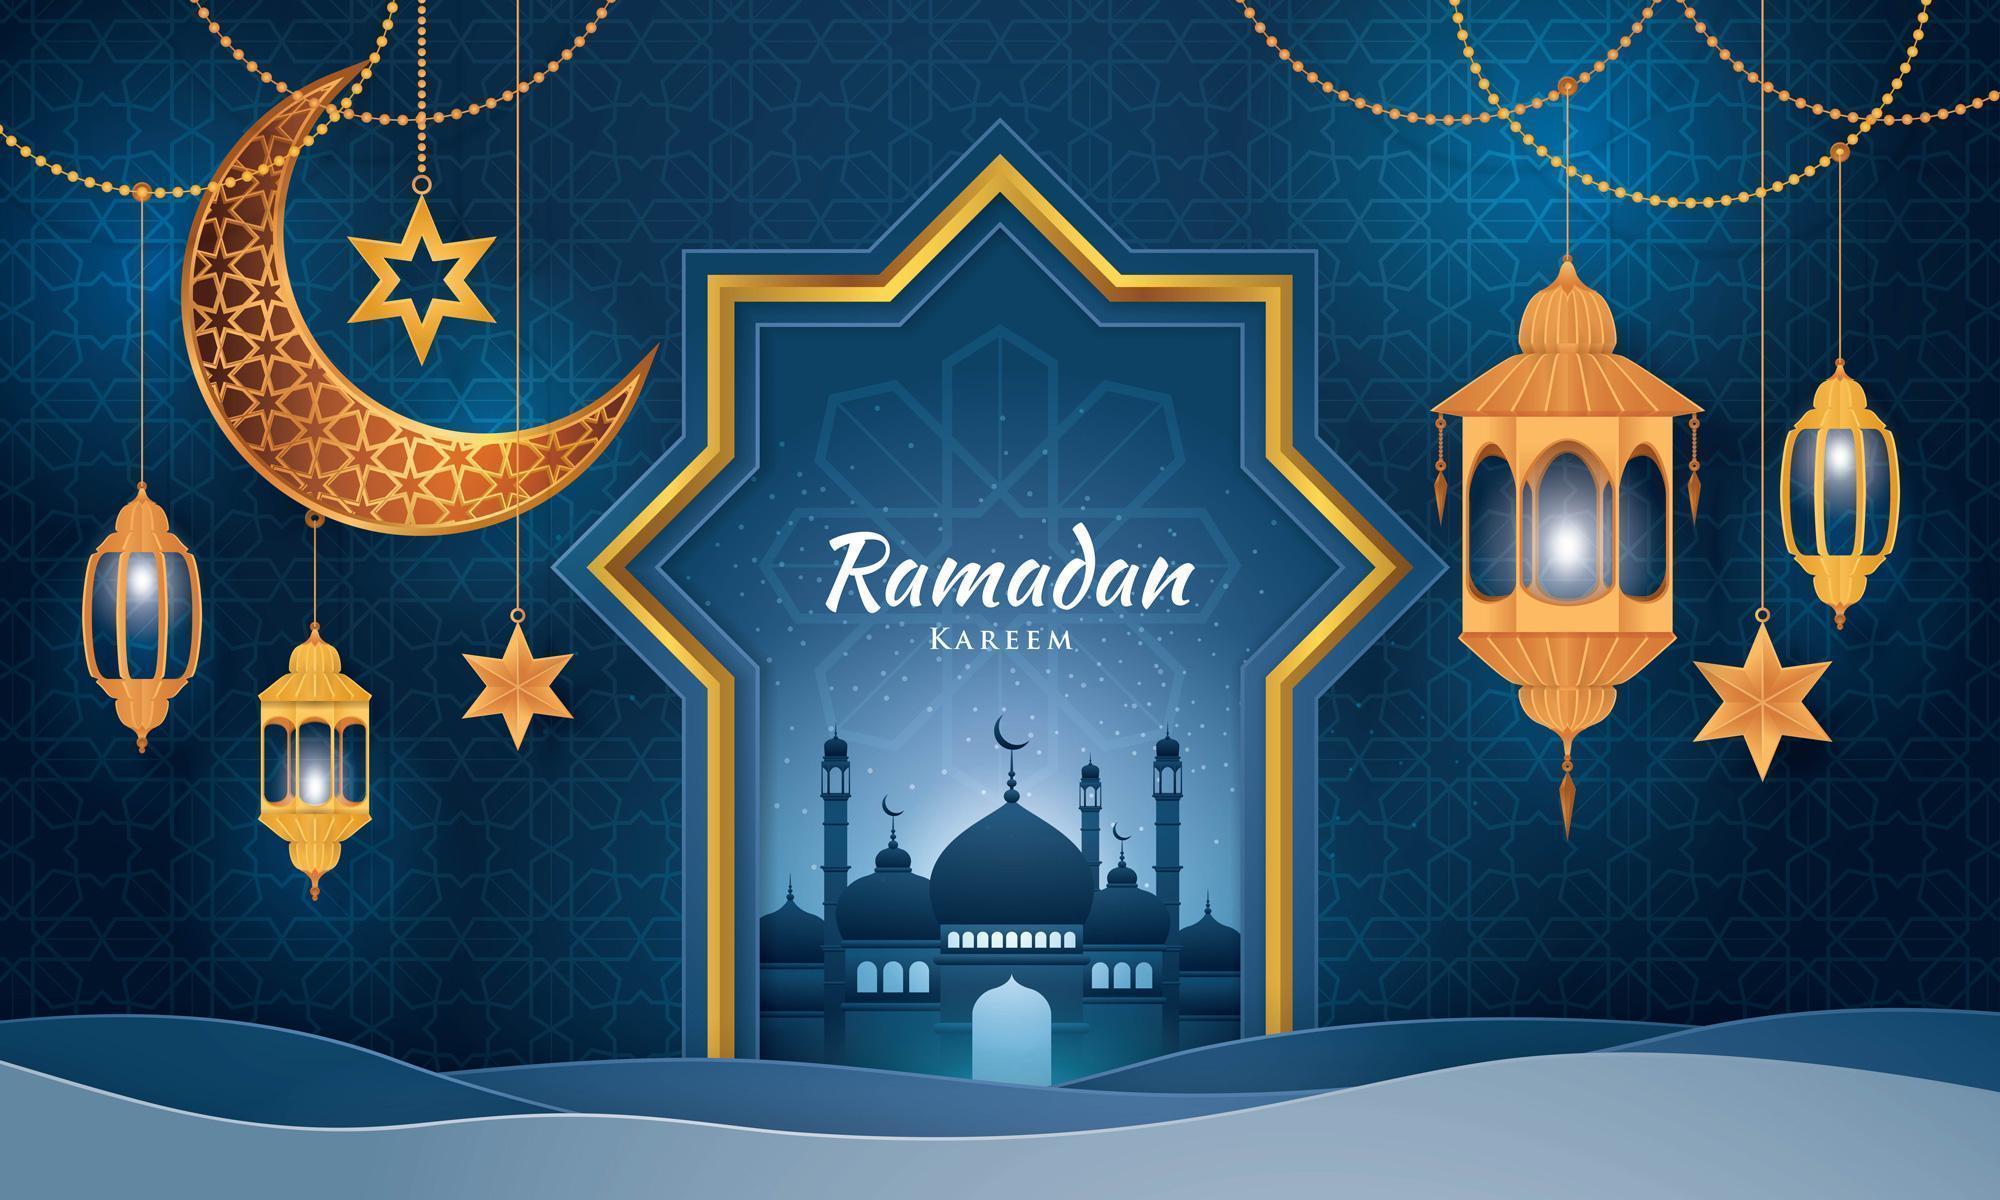 Ramadan - Der Fastenmonat | compass international